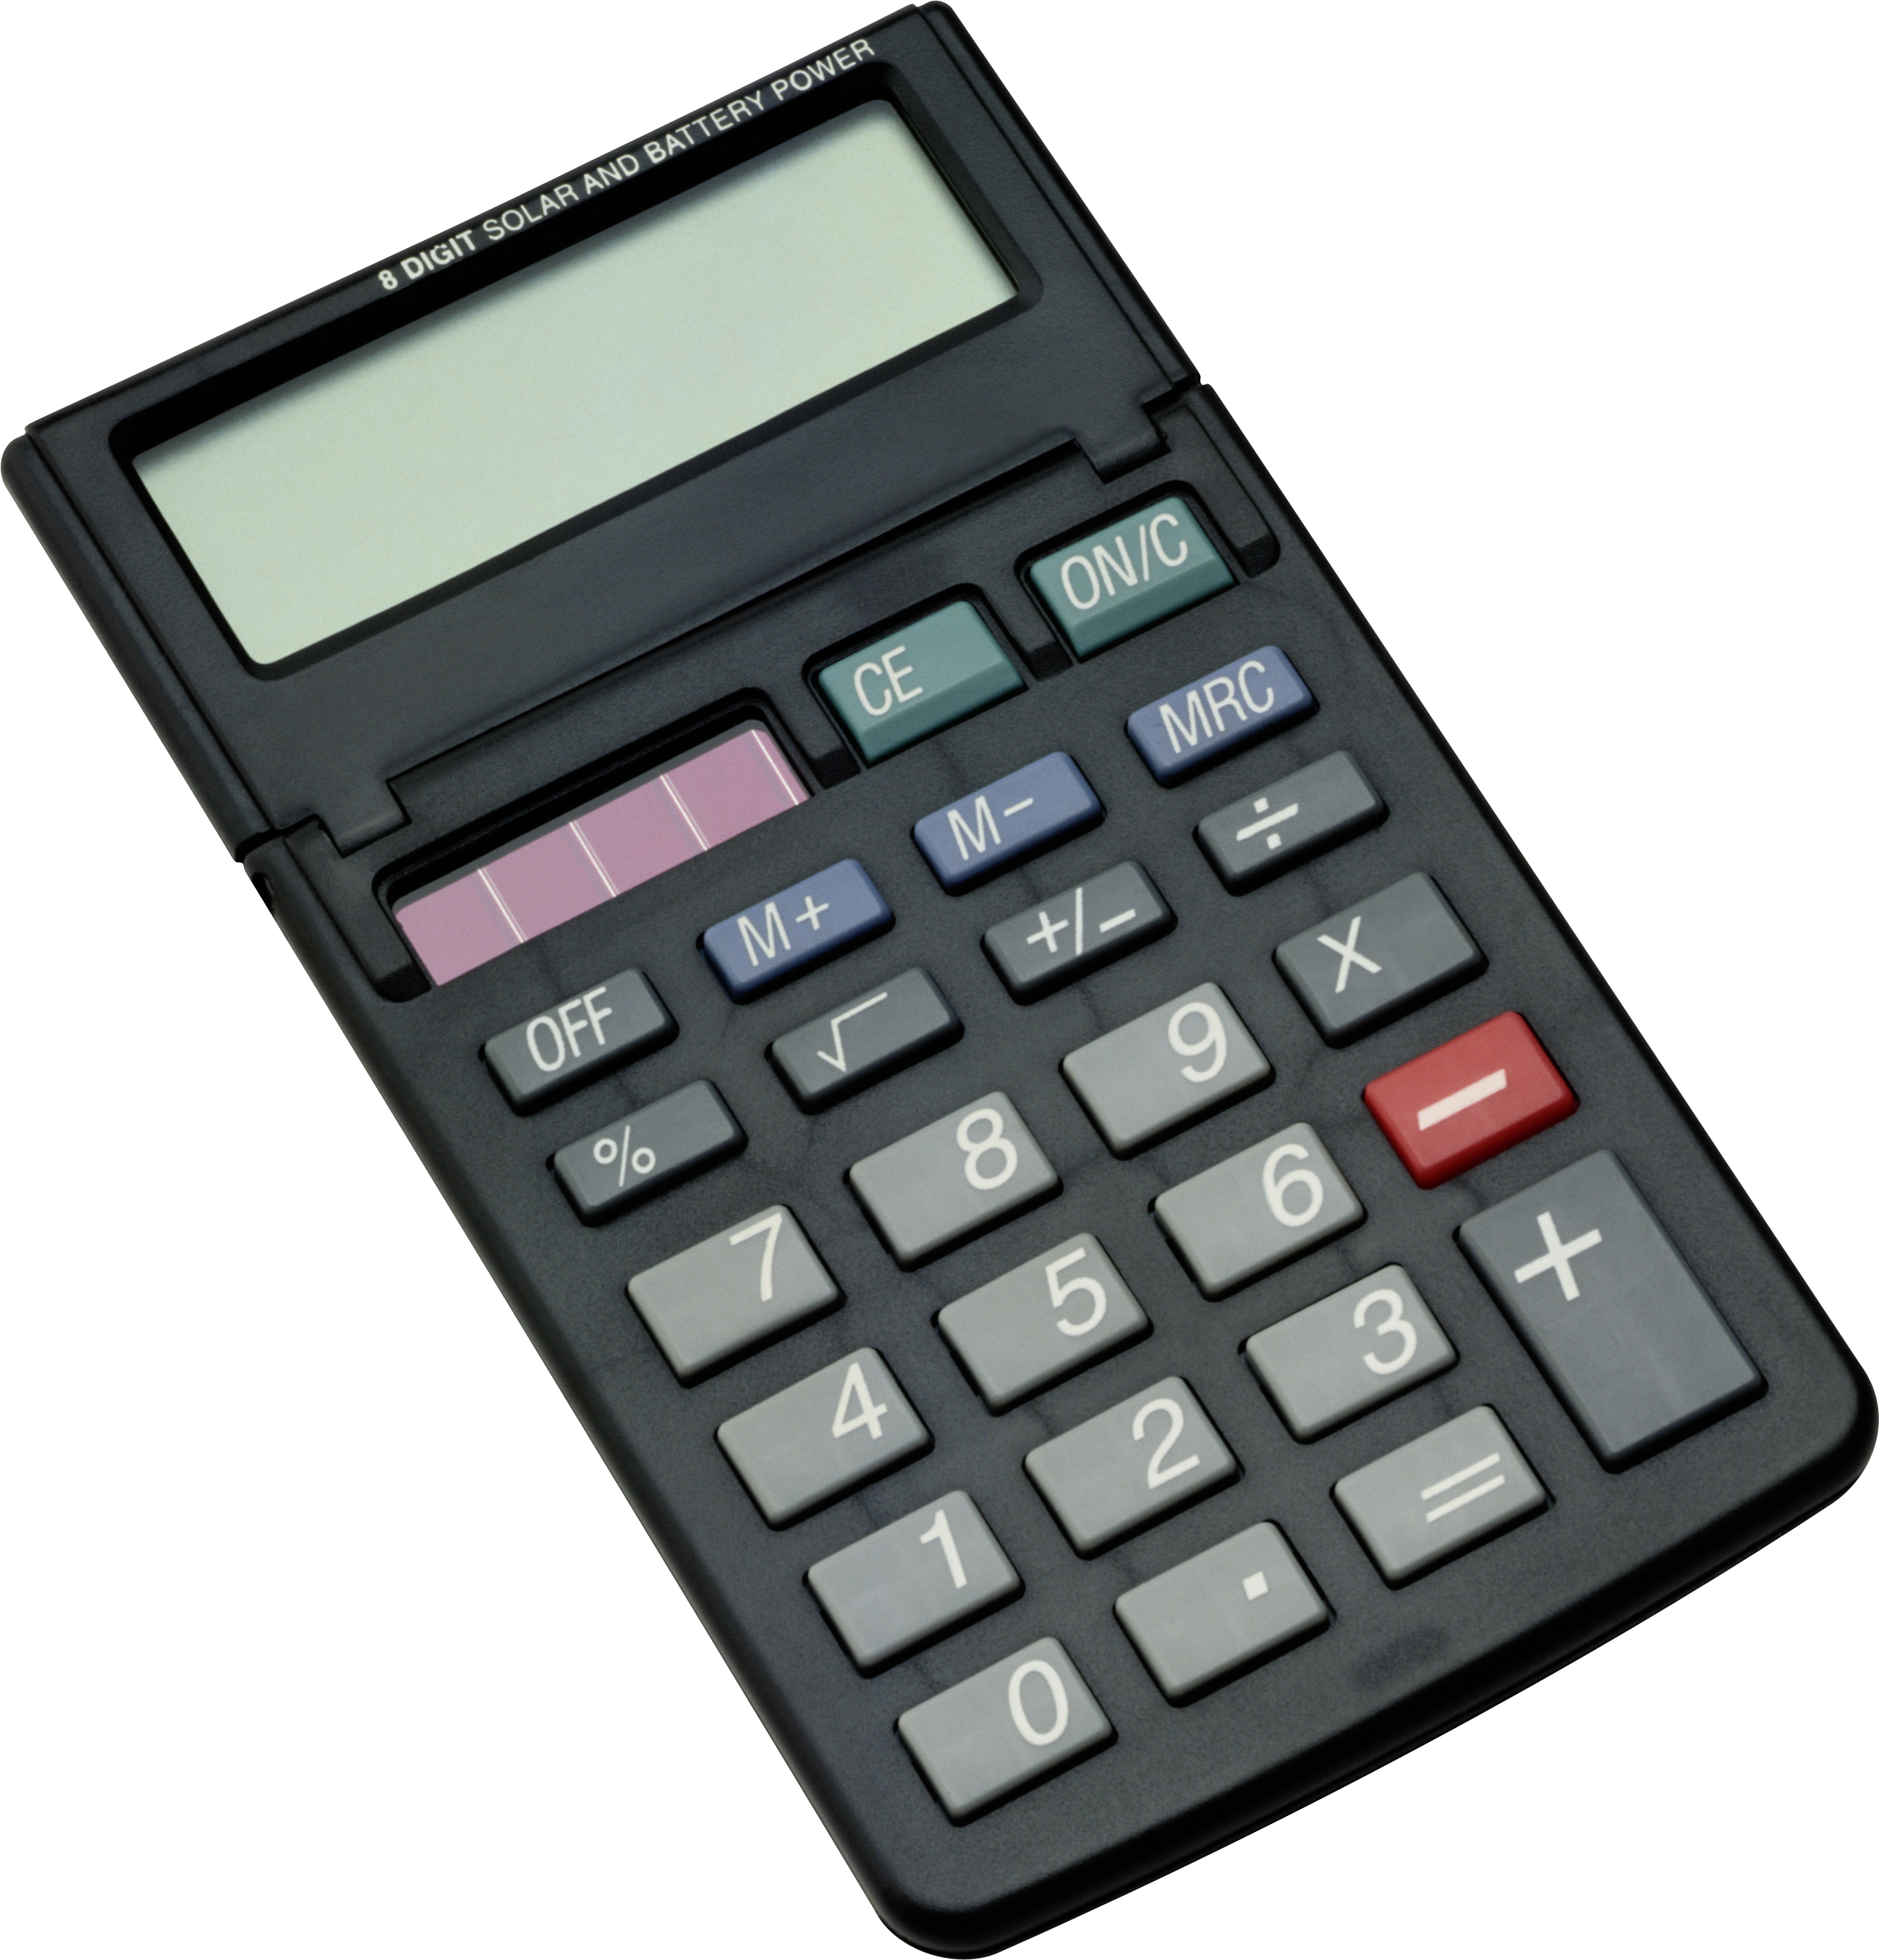 Calculator HD PNG - 93903